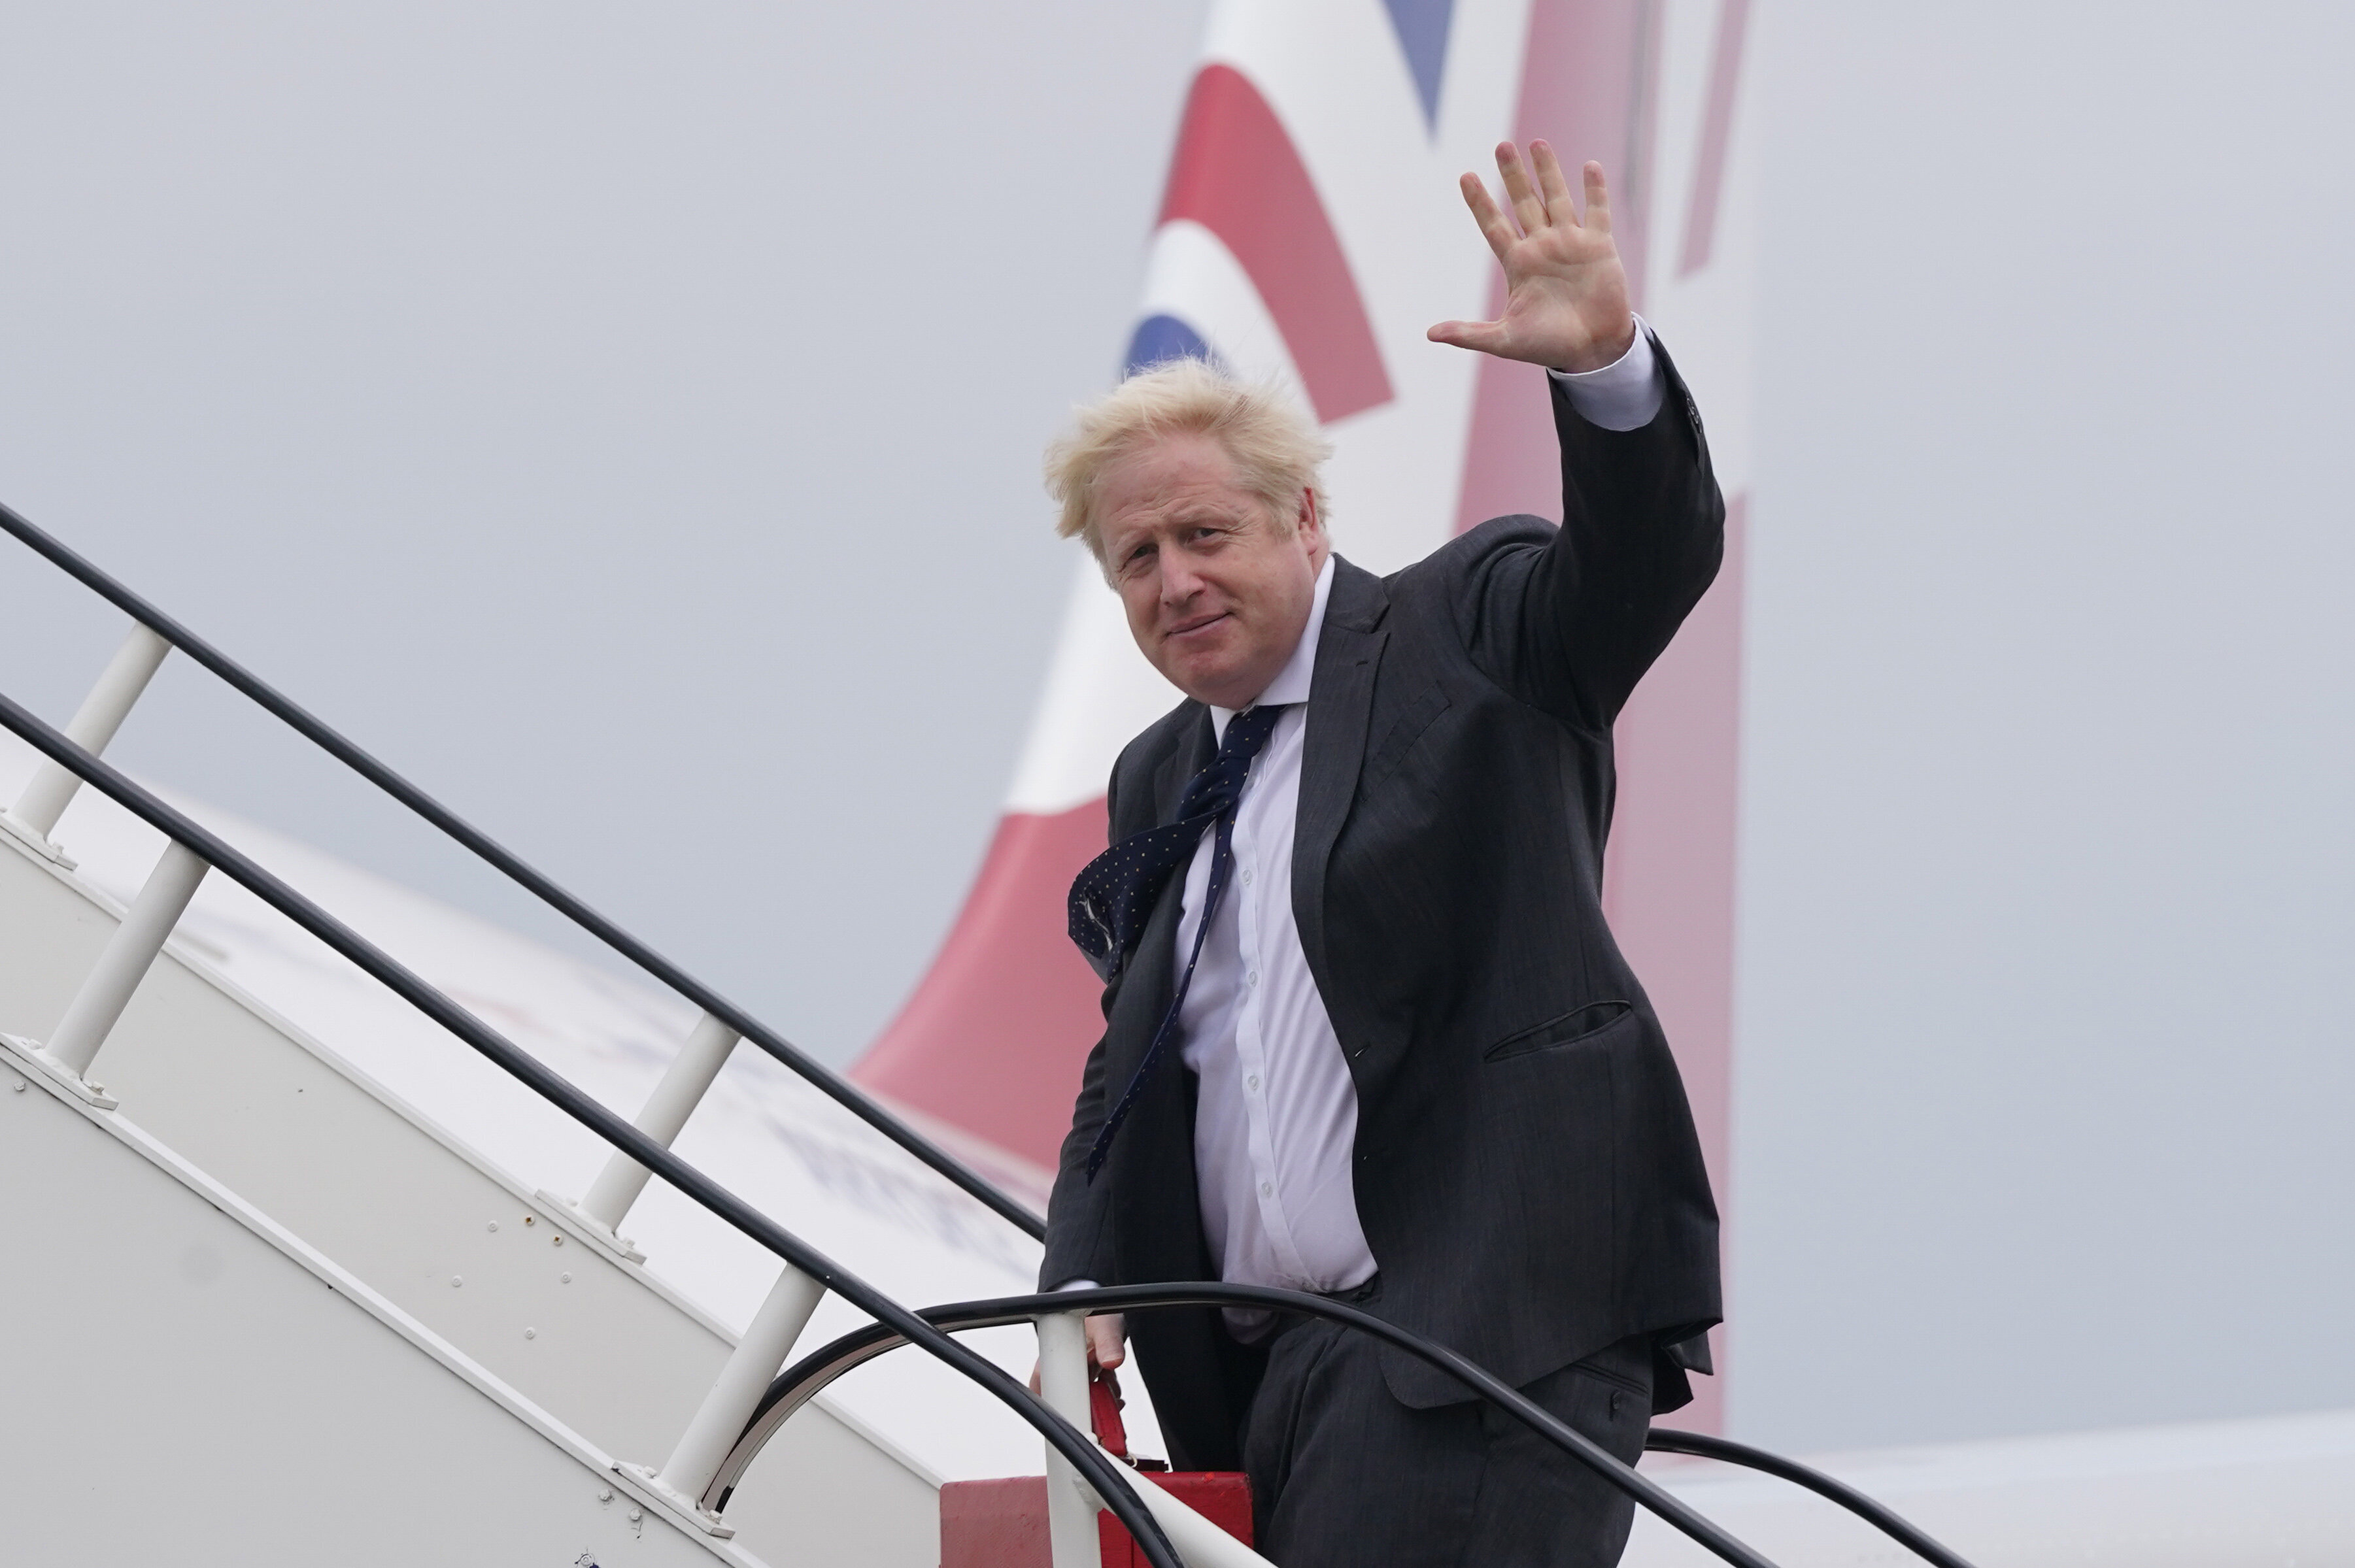 6 Times Boris Johnson Revealed His Climate Change Scepticism